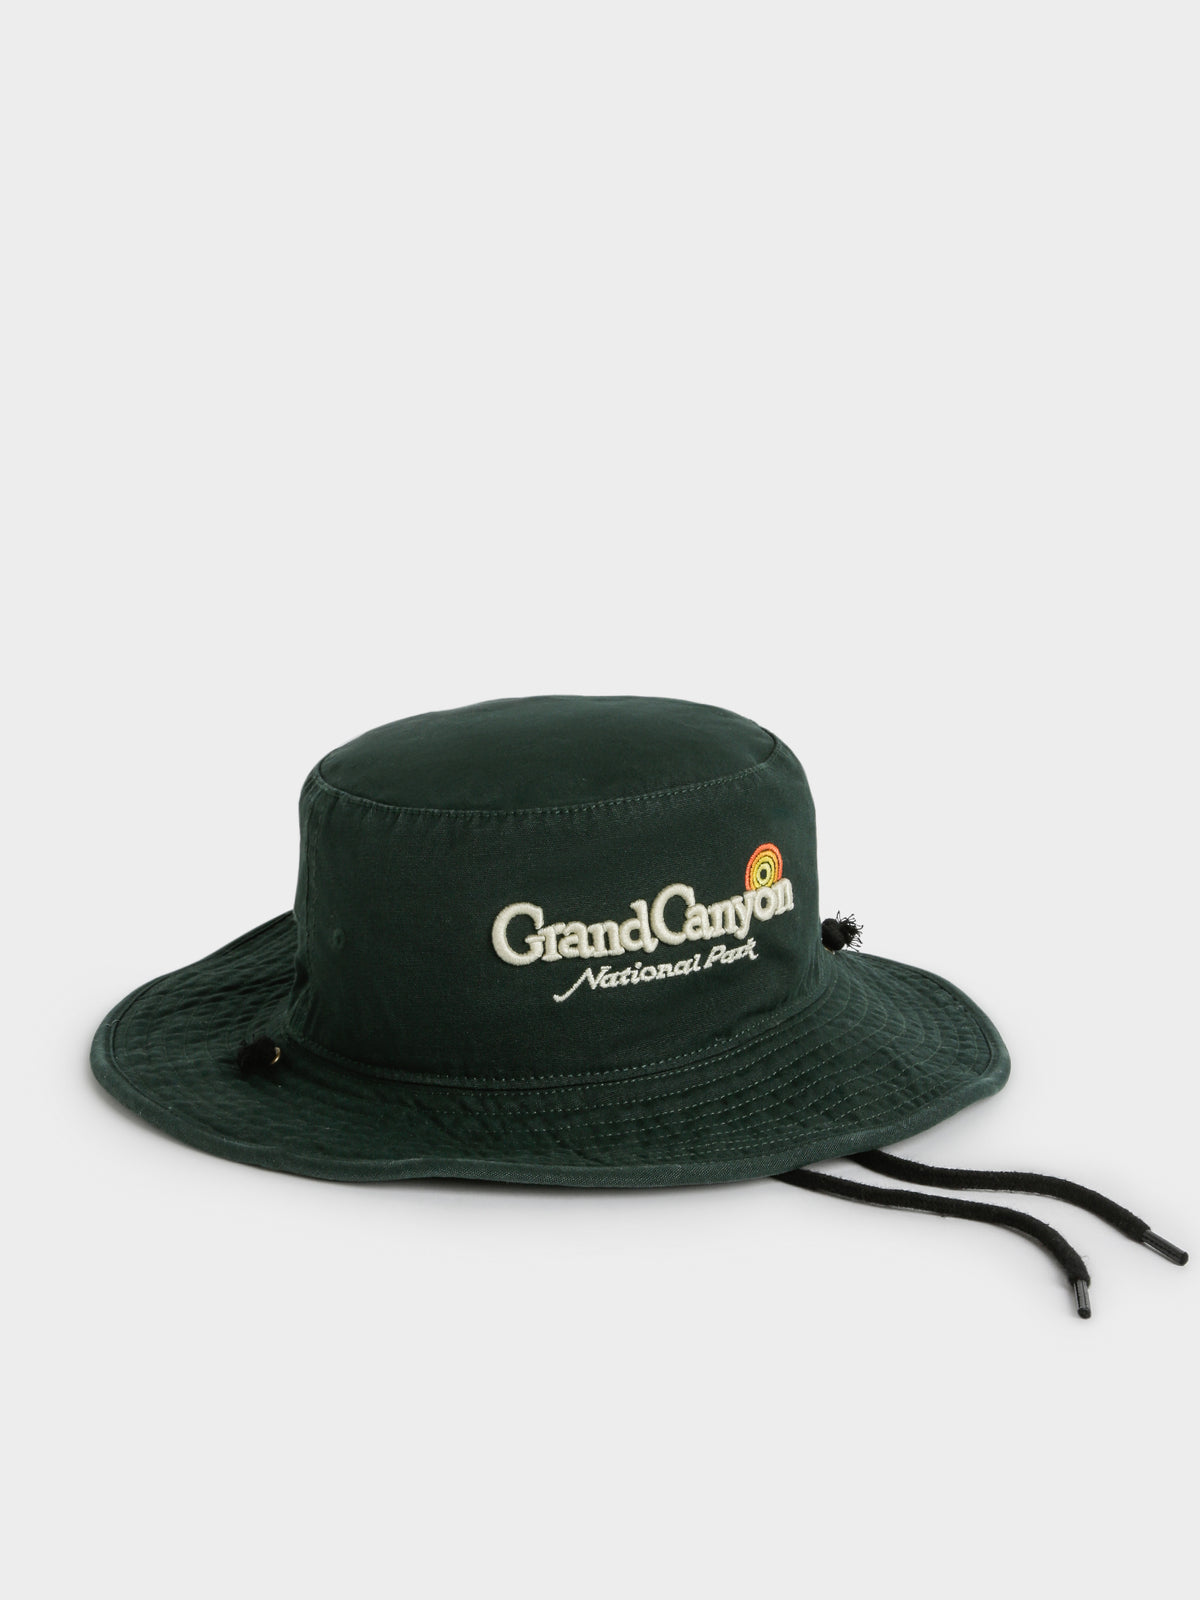 Grand Canyon Wide Brim Hat in Dark Green